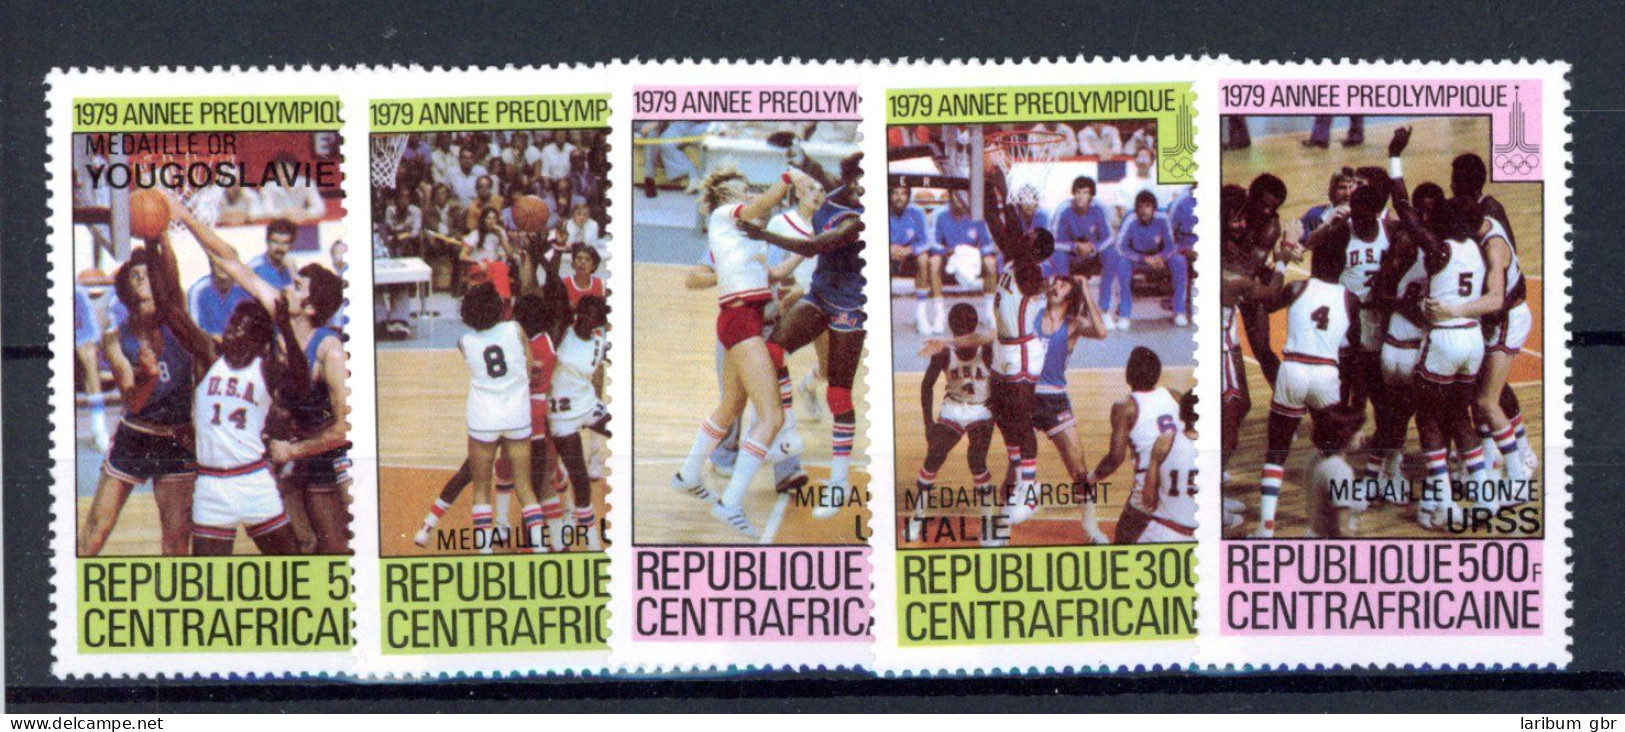 Zentralafrikanische Republik 653-657 Postfrisch Olympia 1980 Moskau #JR845 - Central African Republic